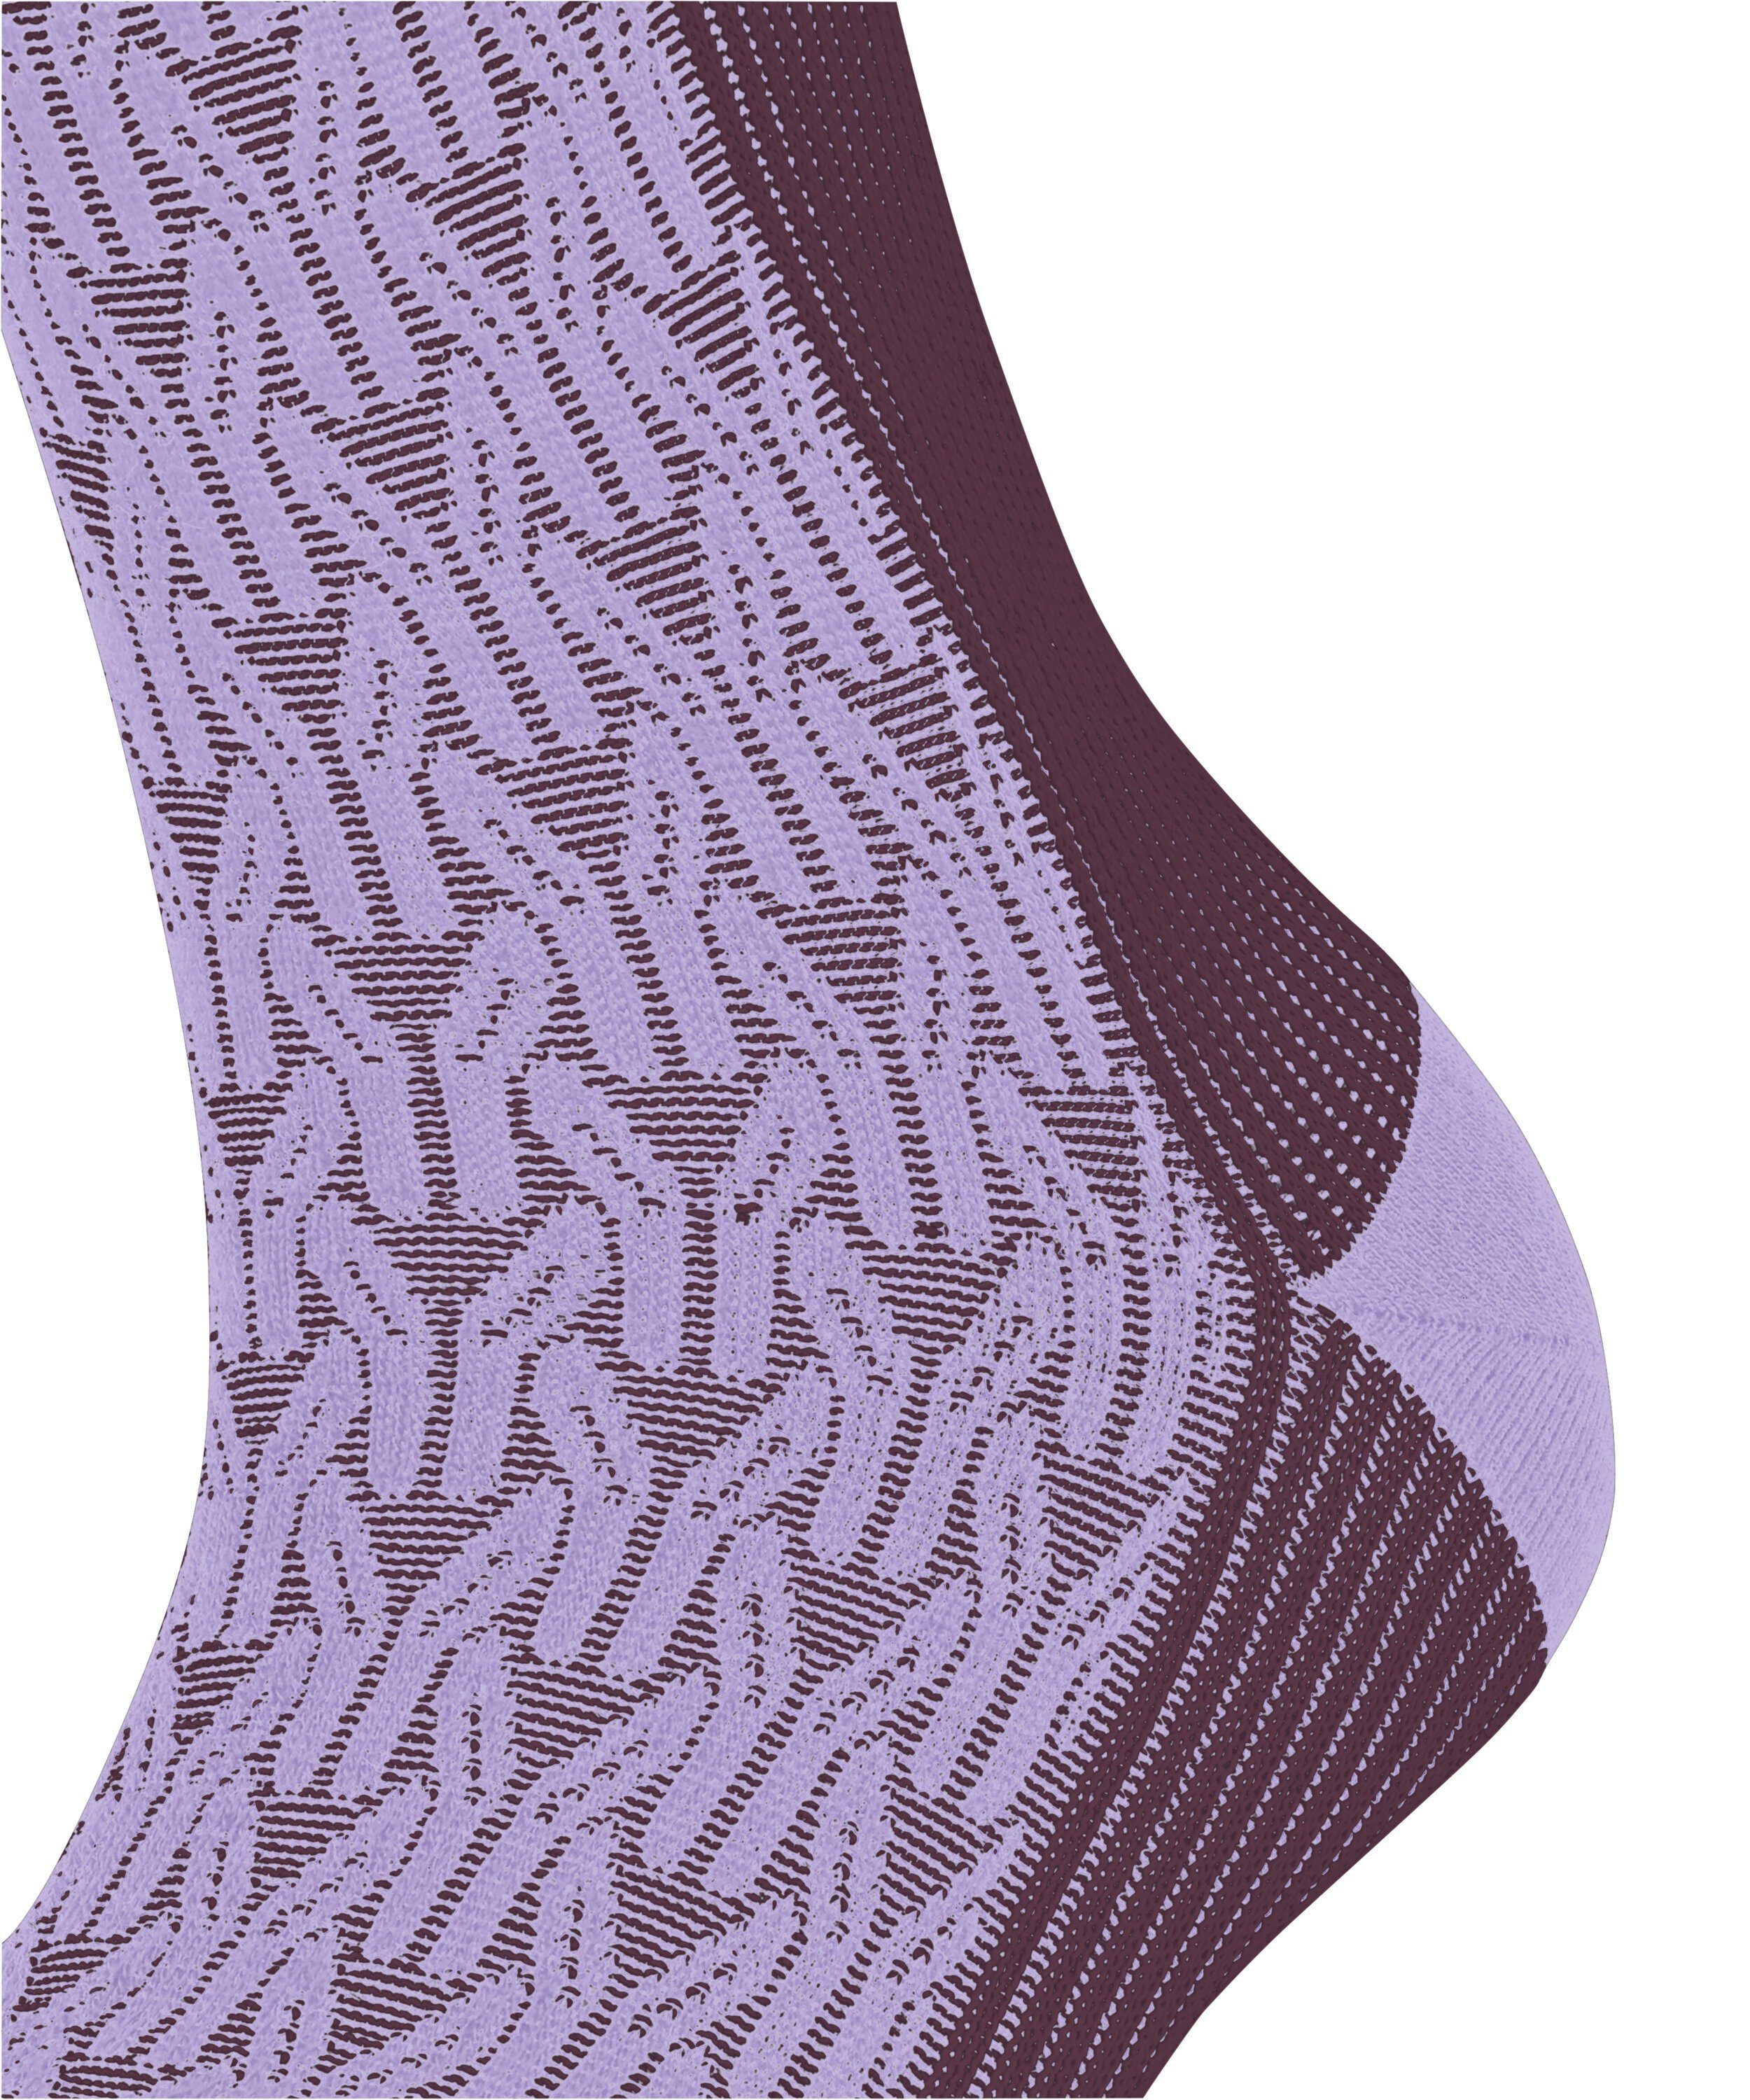 FALKE lupine (1-Paar) Mesh Socken Immersive (6903)